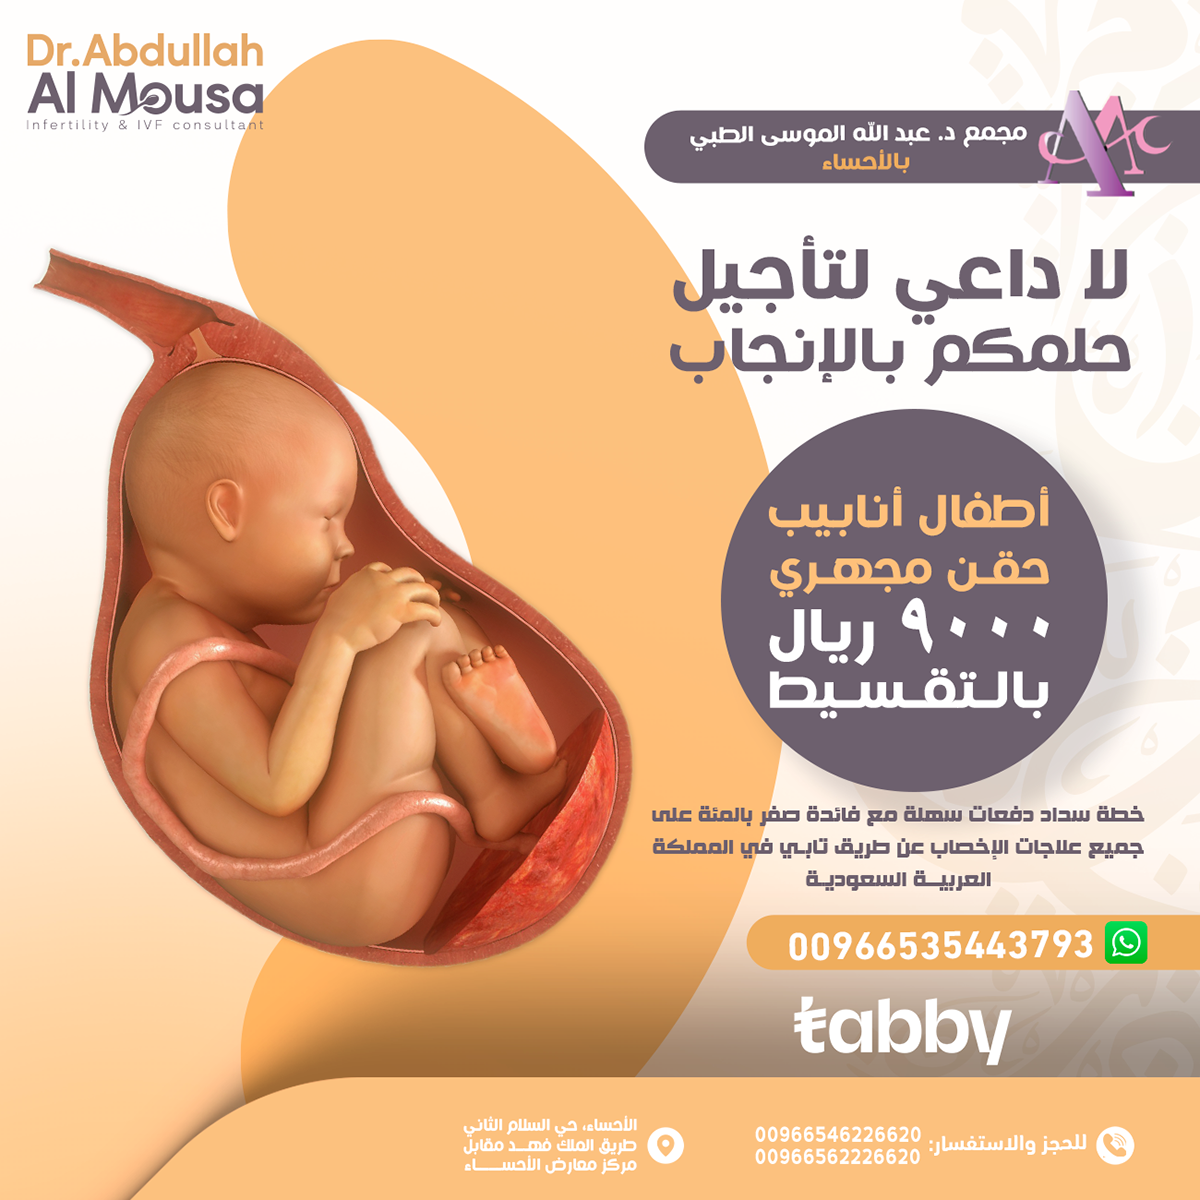 IVF women health gynecology obstetrics pregnancy Marklinica social media Saudi Arabia Infertility Treatment test tube baby center